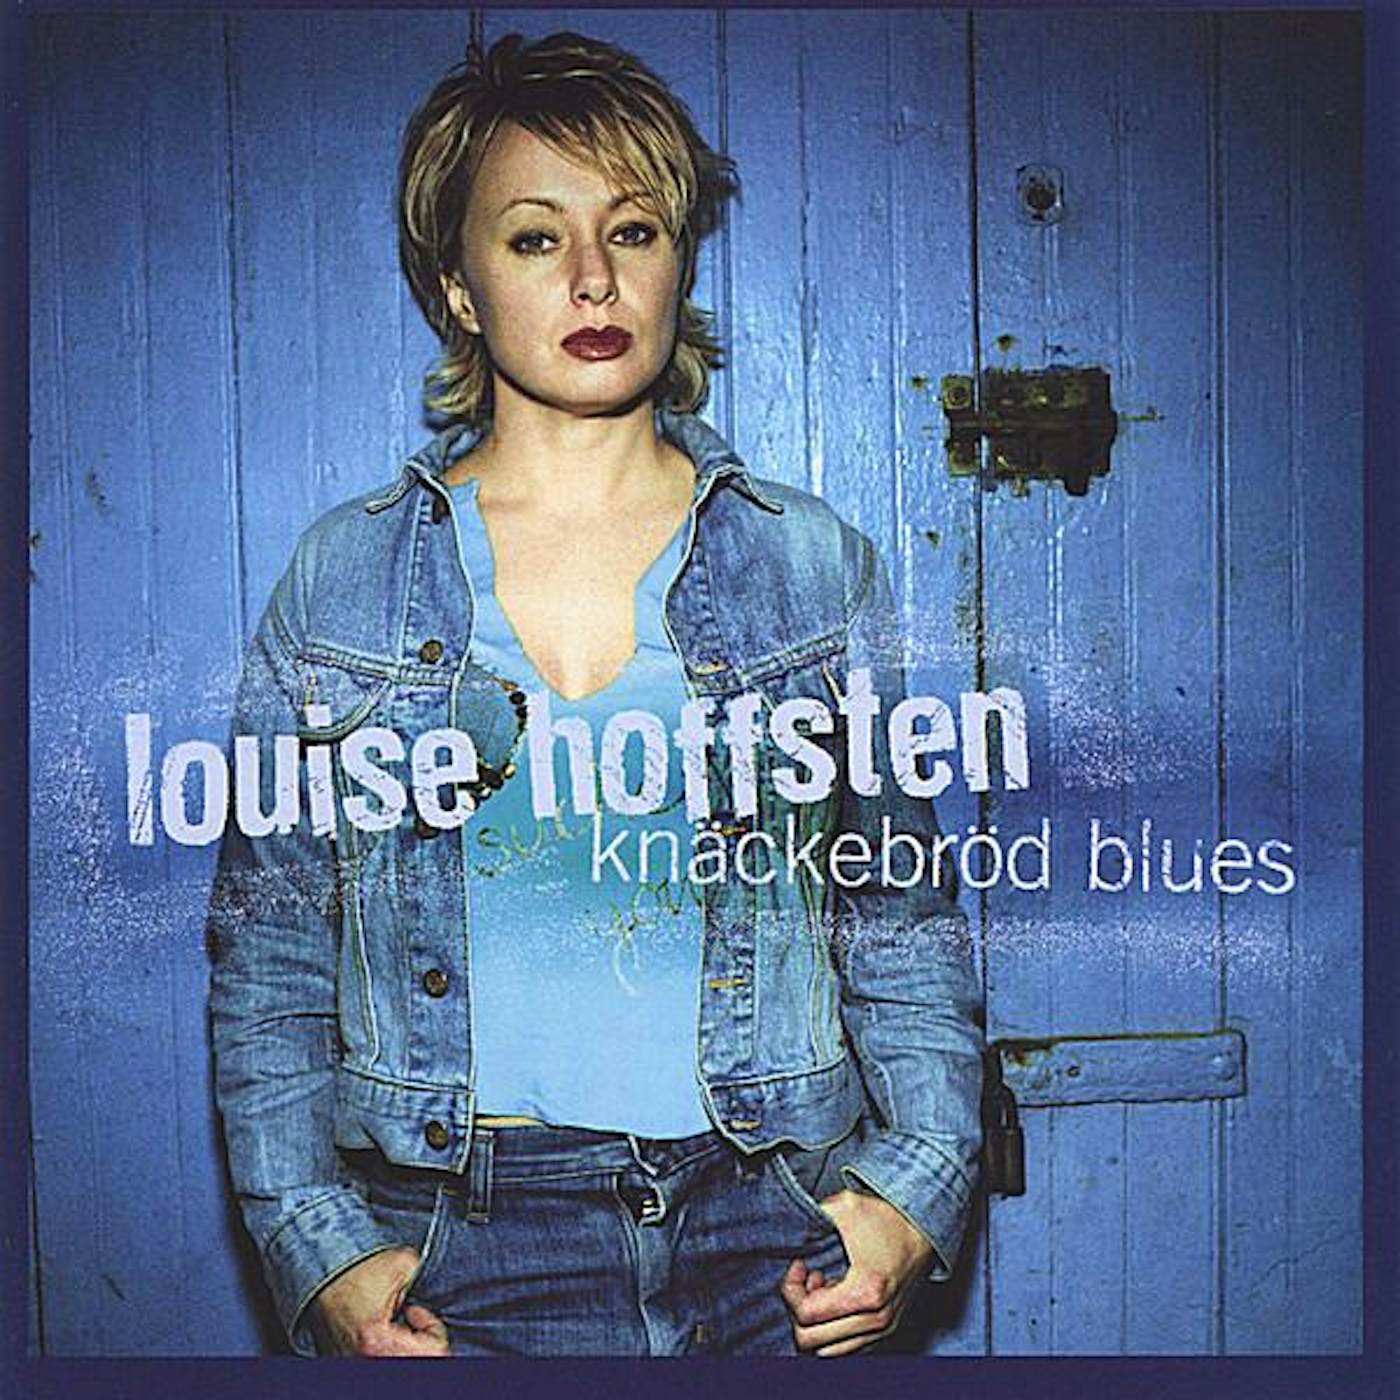 Louise Hoffsten KNACKEBROD BLUES CD